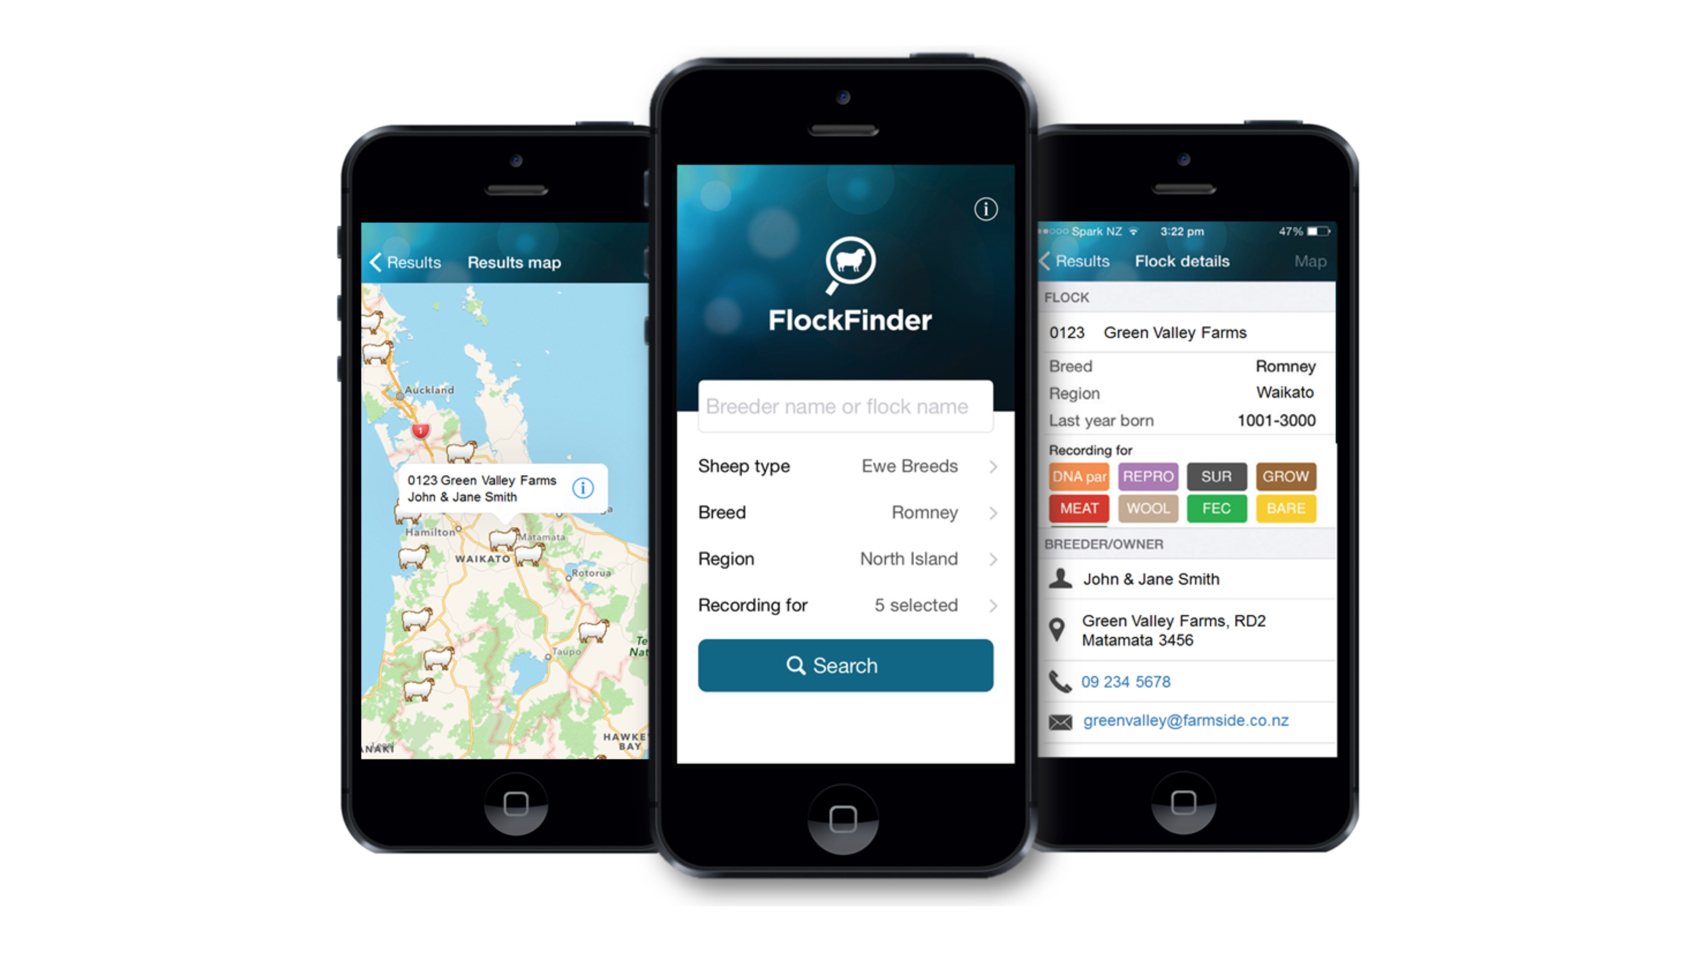 Flockfinder app to help find “best fit” ram breeders